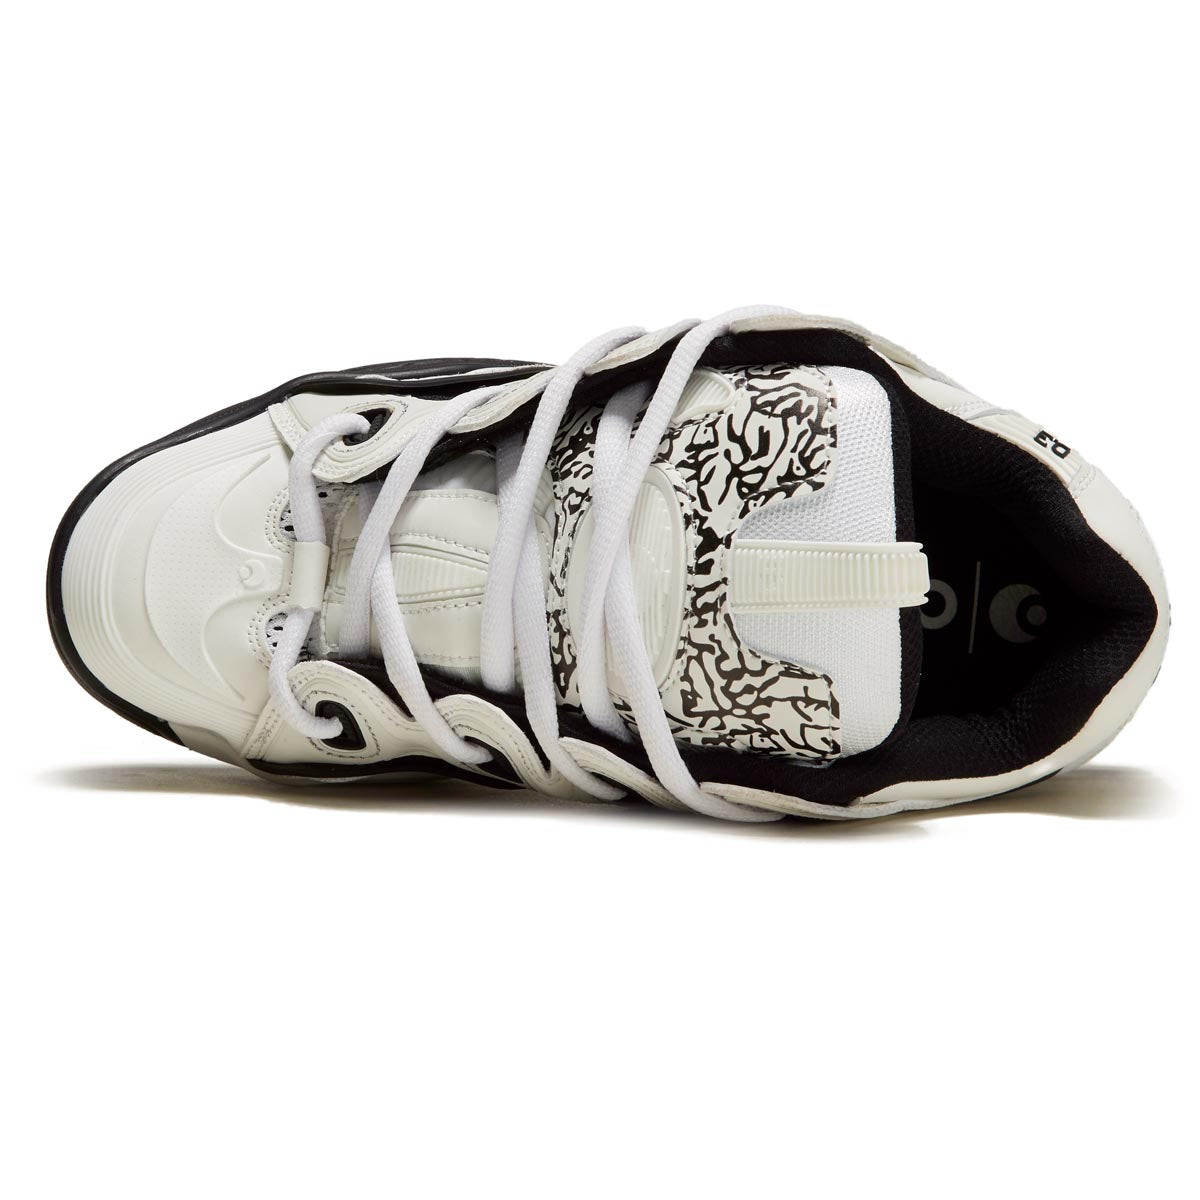 Osiris D3 2001 Shoes - Black/White/Crack image 3